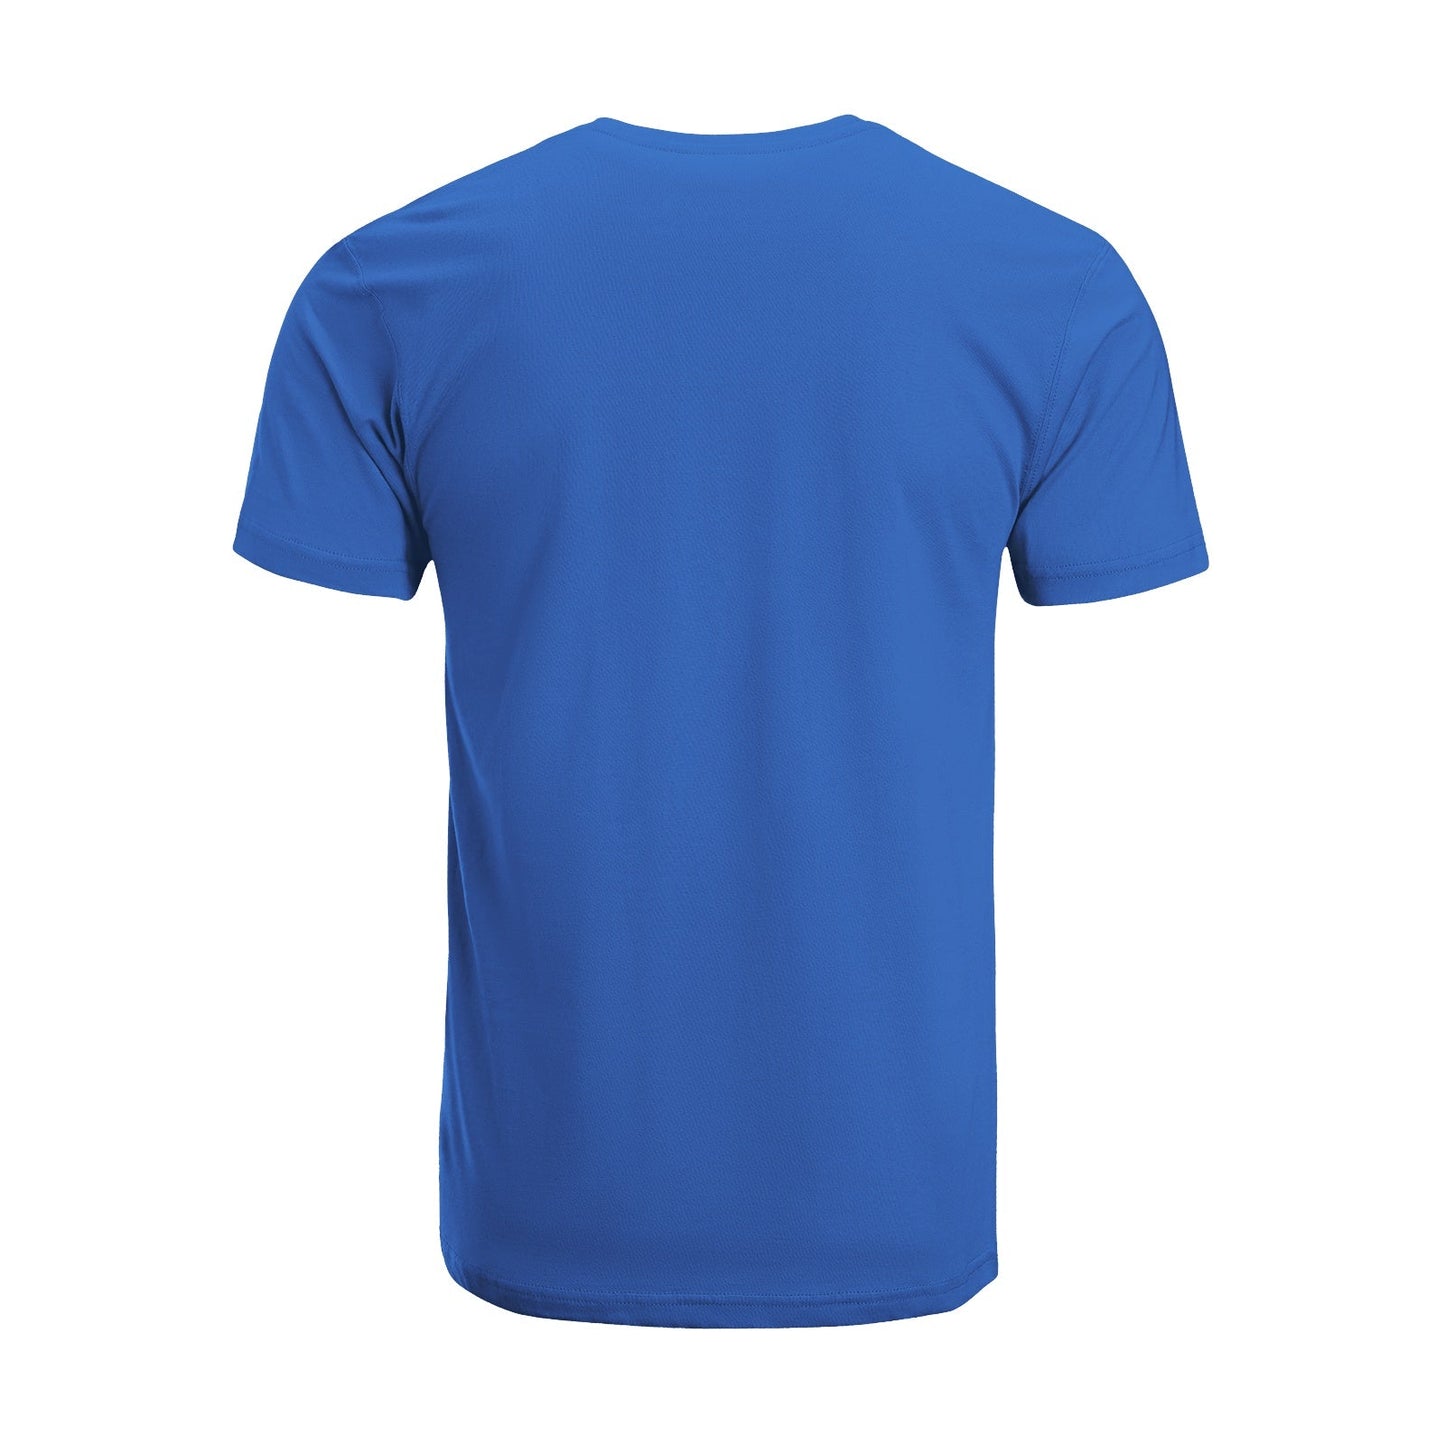 Unisex Short Sleeve Crew Neck Cotton Jersey T-Shirt MOM 37